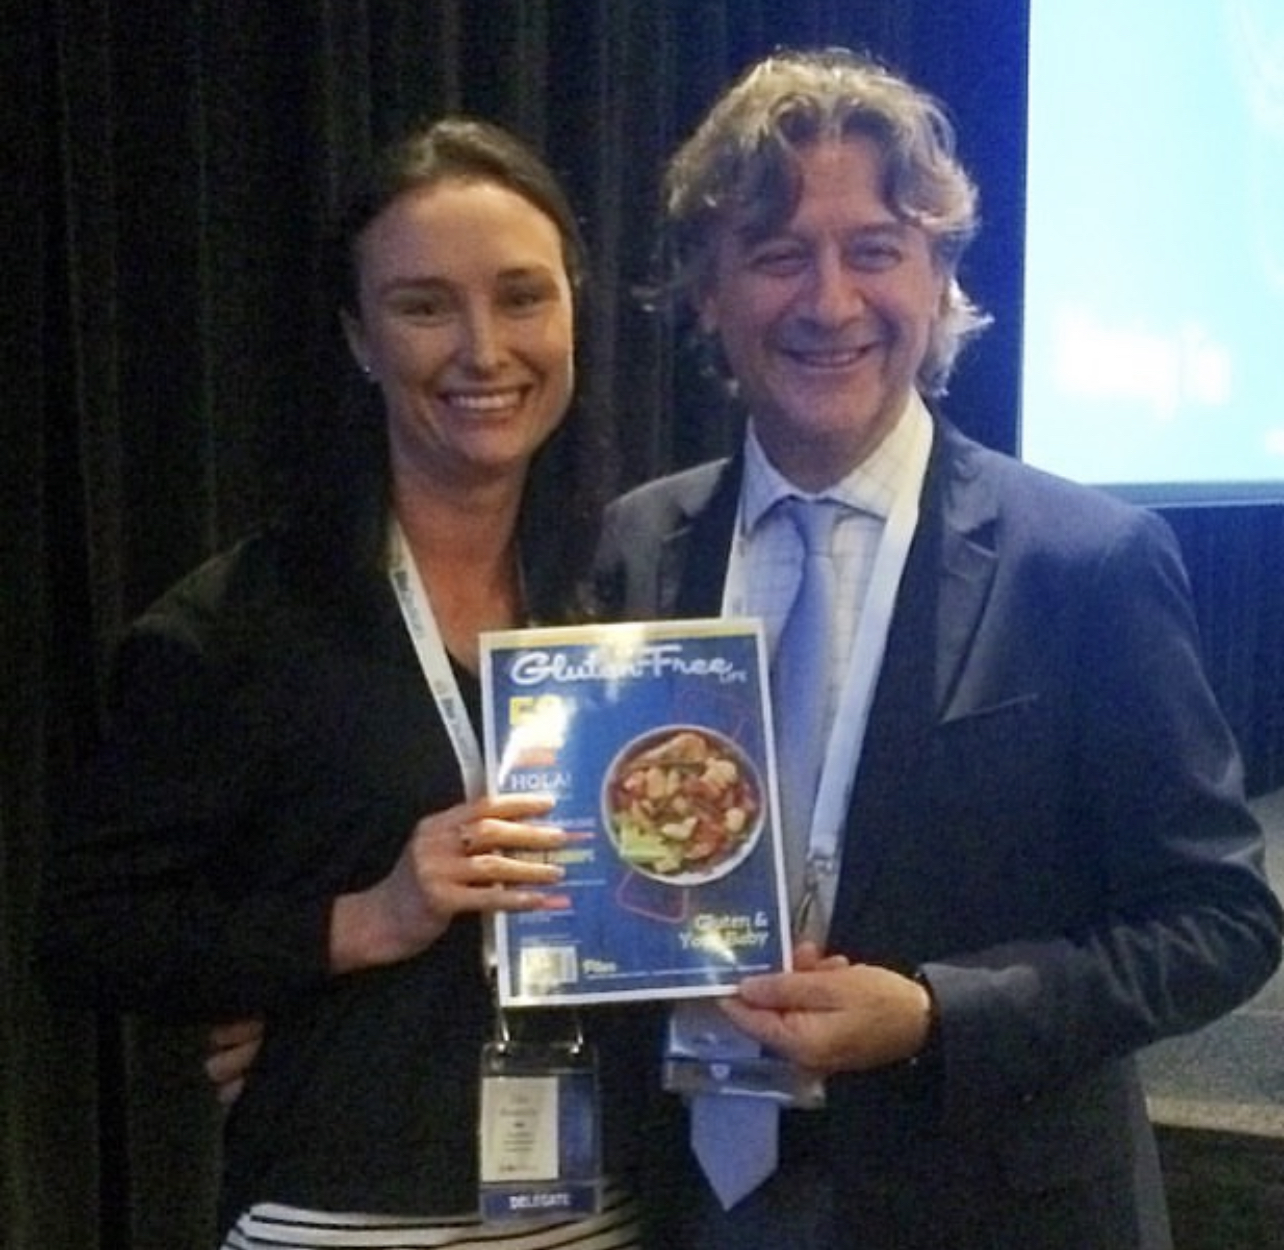 Australian Gluten-Free Life magazine editor Cara Boatswain and director of the Center for Celiac Research, Dr Alessio Fasano.